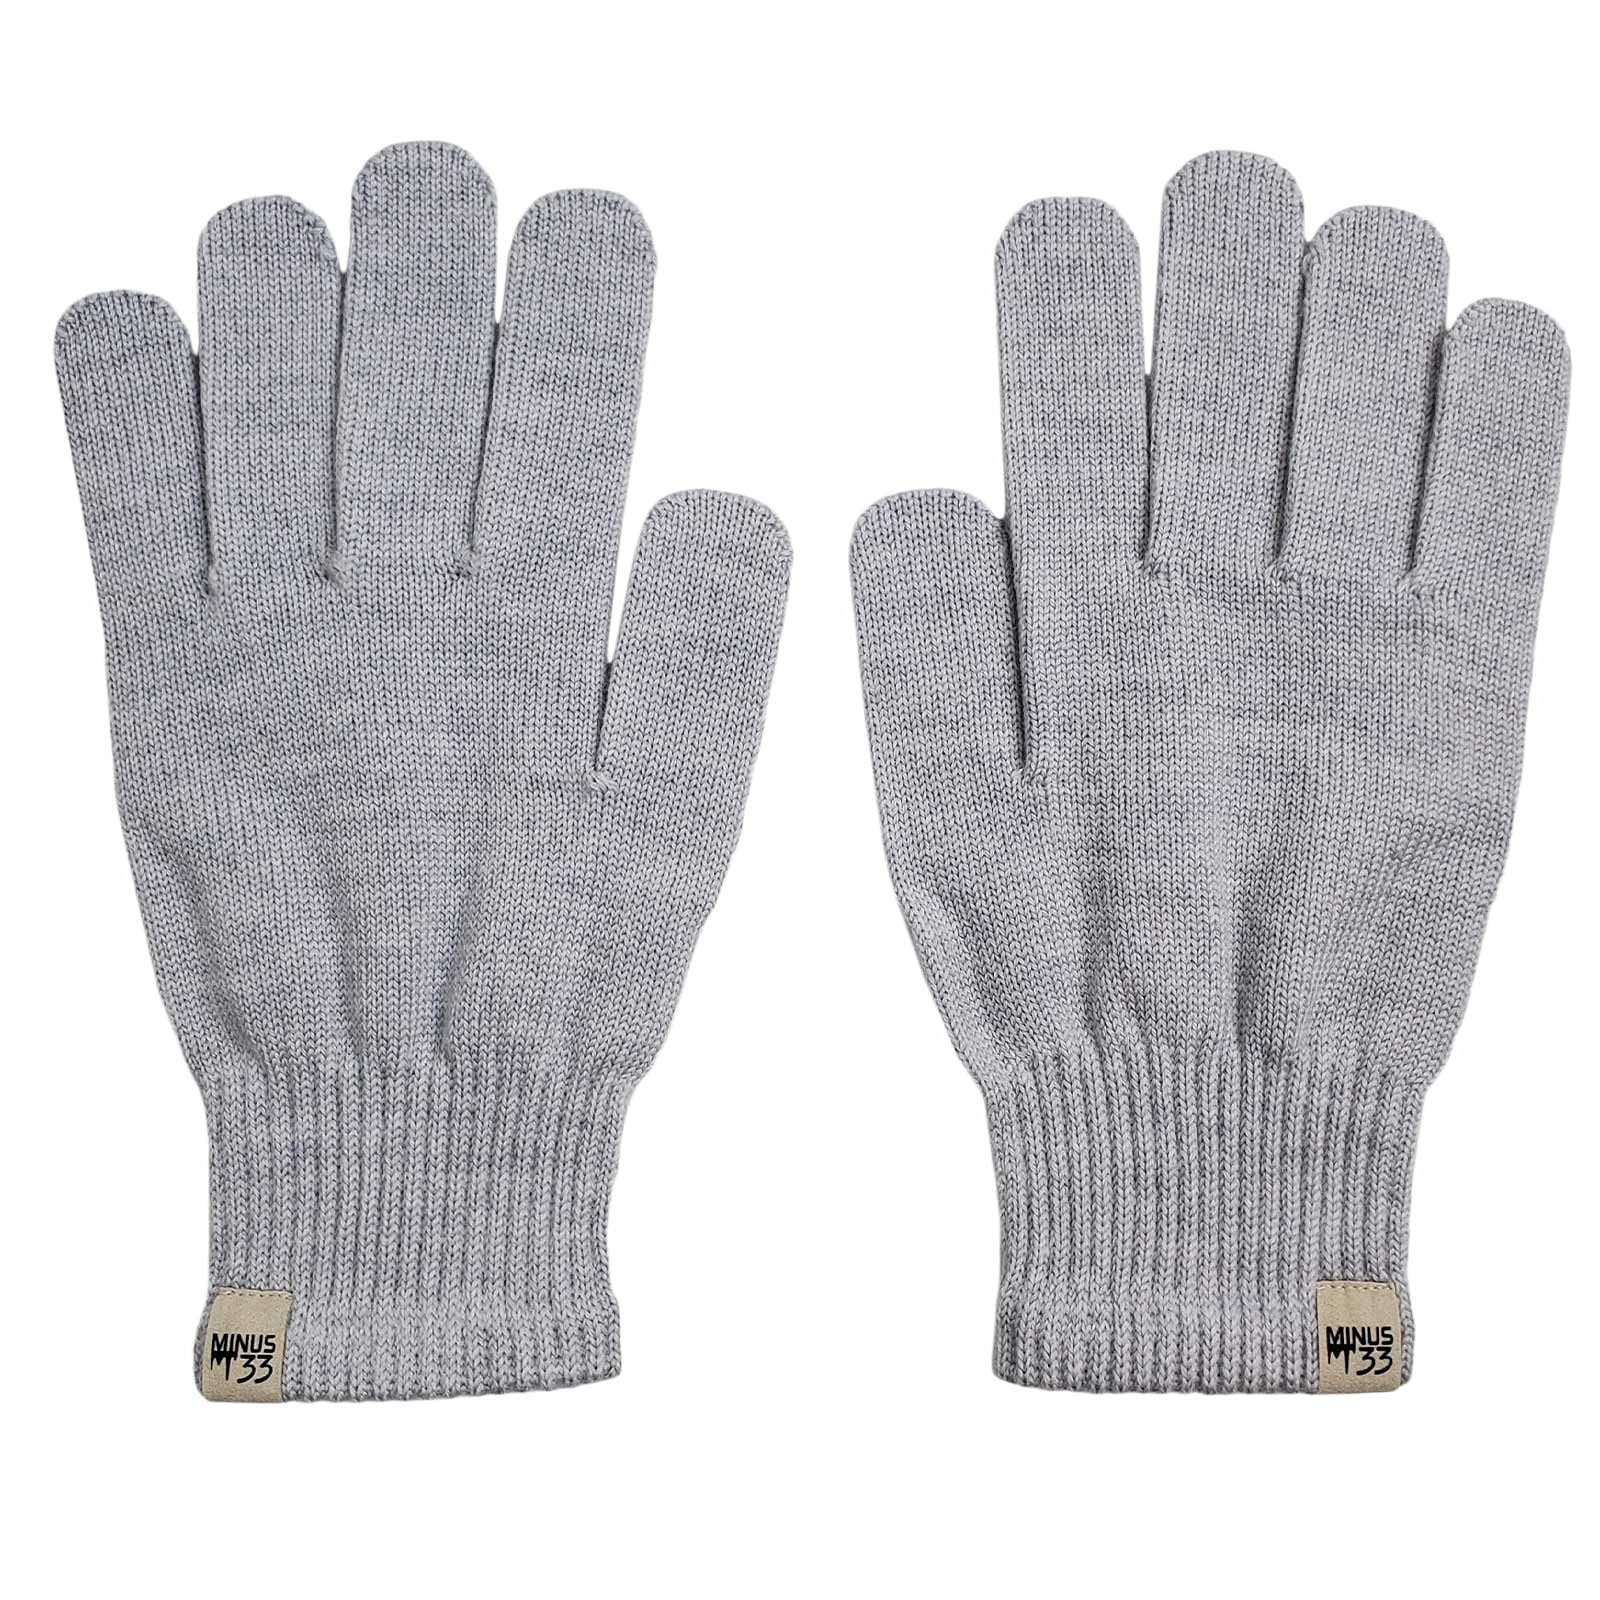 Minus33 Merino Wool Glove Liner - Warm Base Layer - Ski Liner